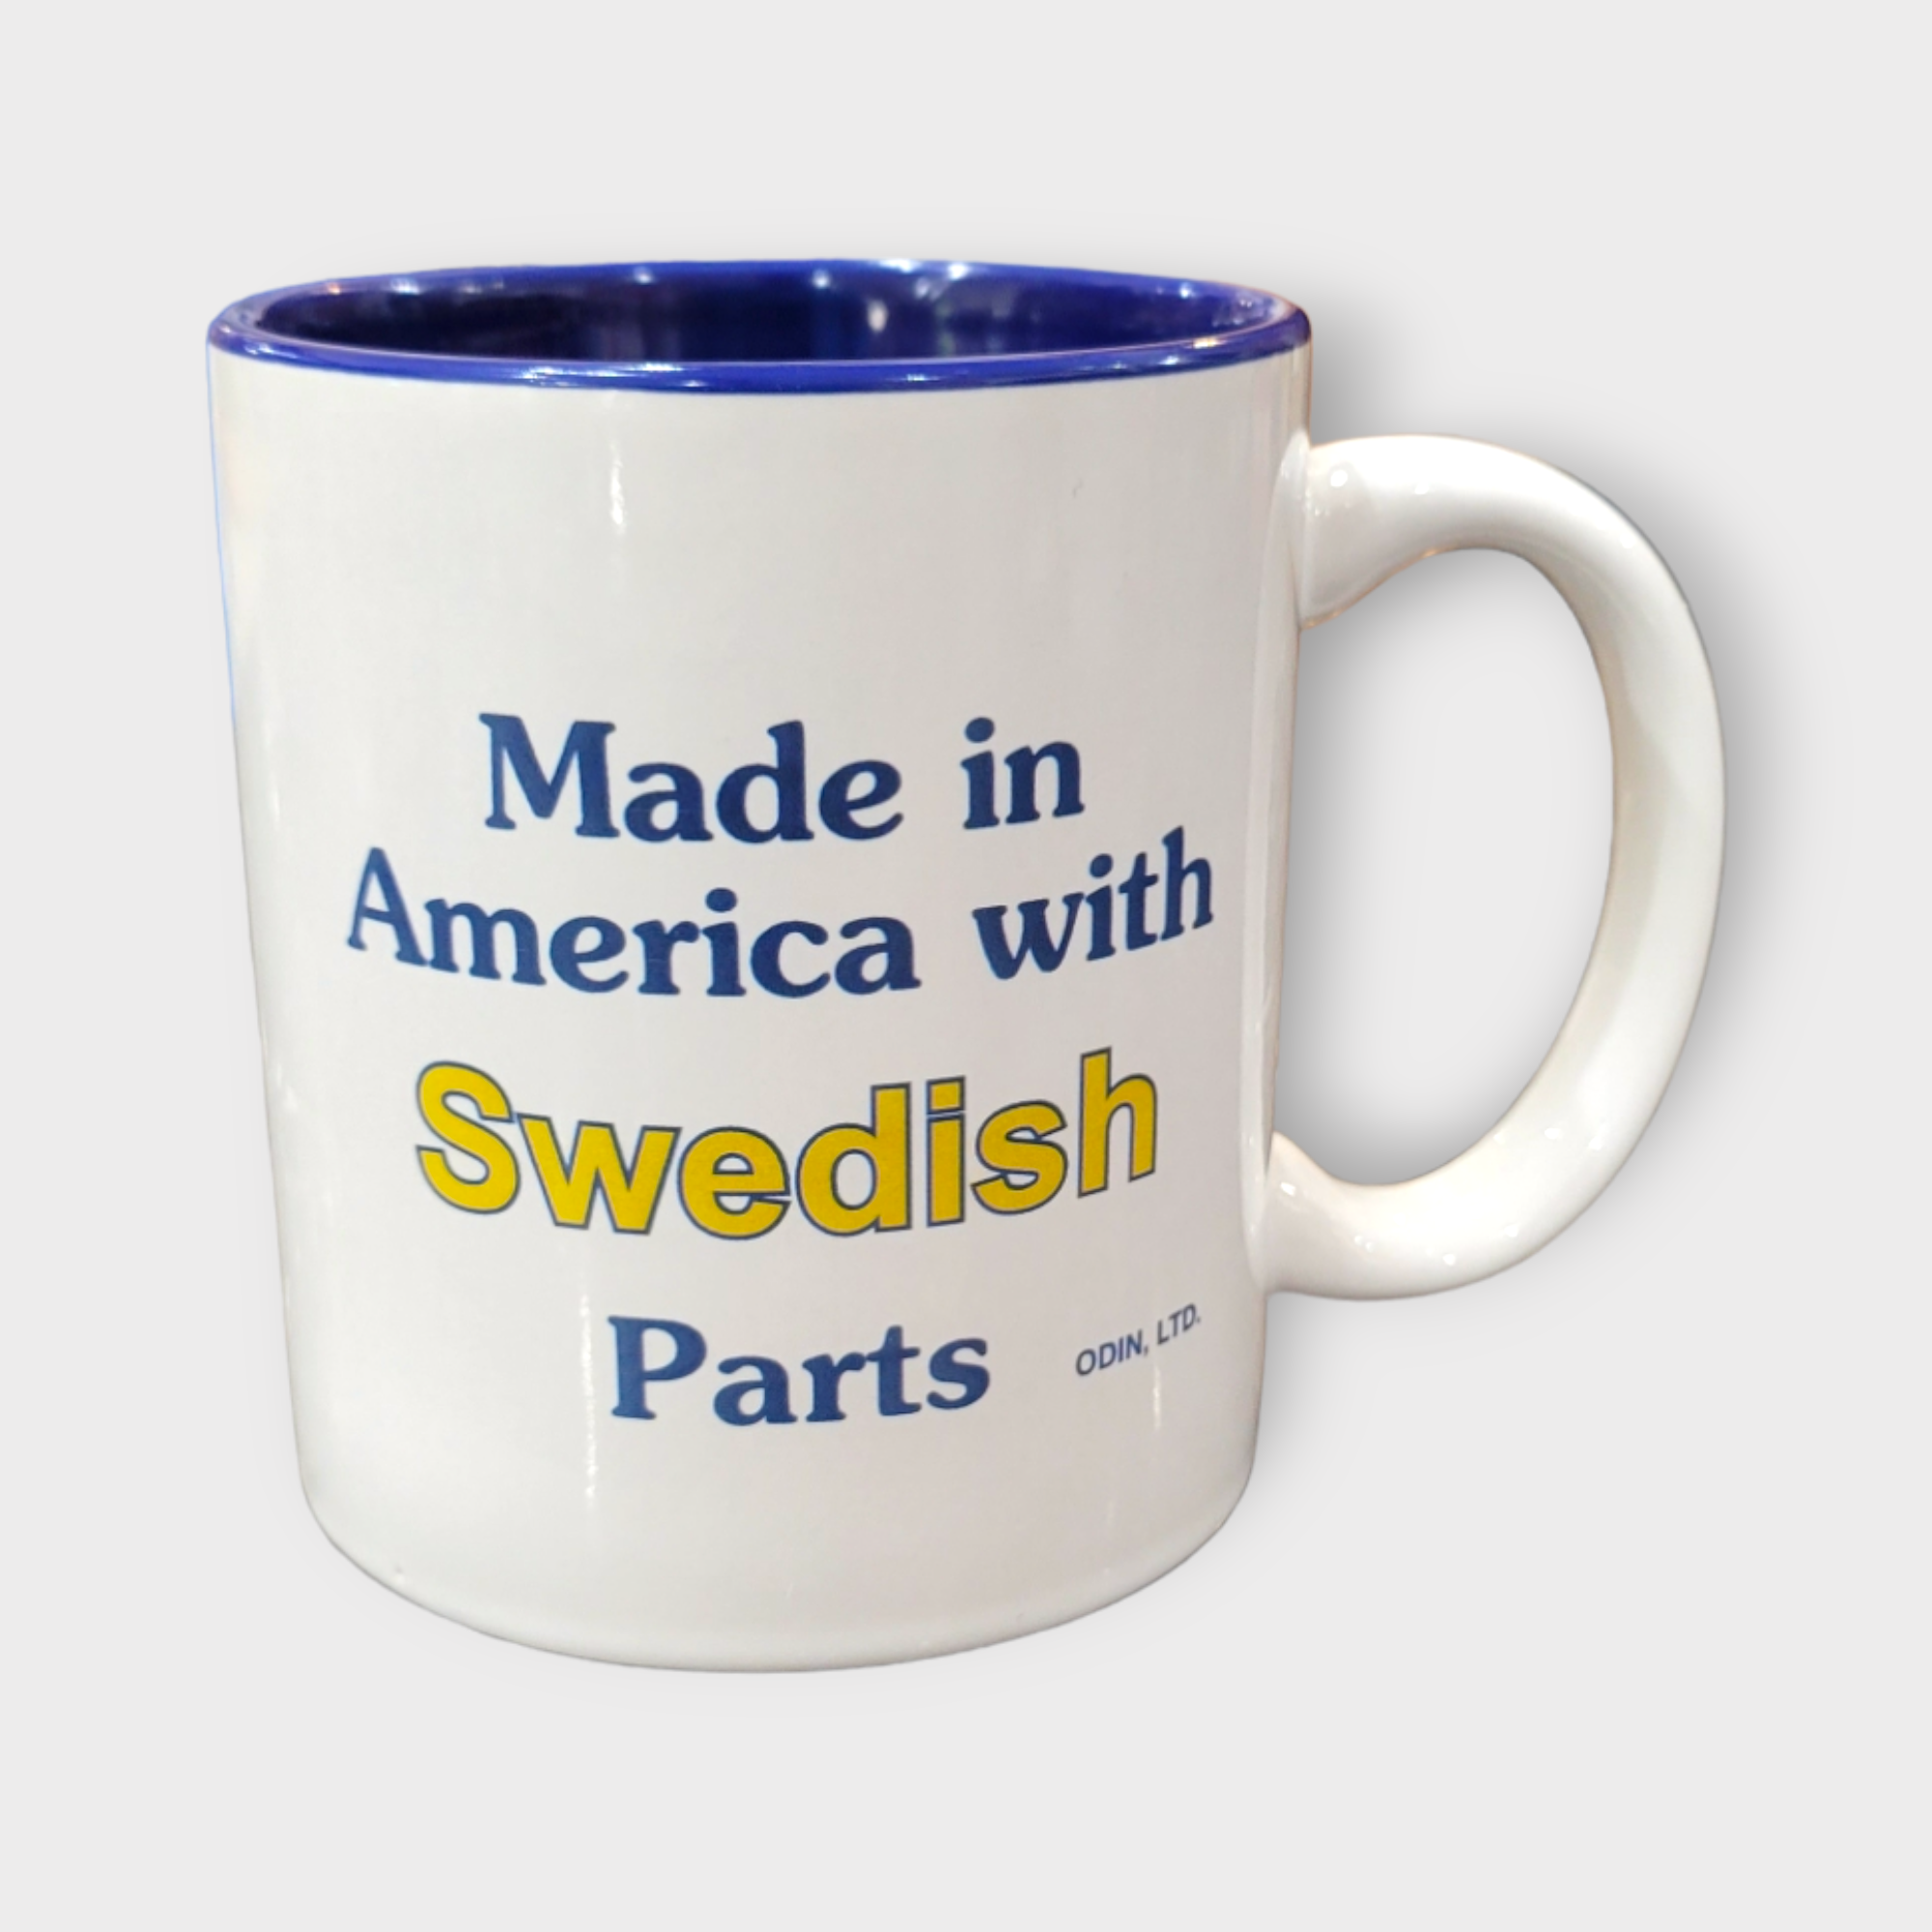 Mug: "Made in America with Swedish Parts" (11oz)